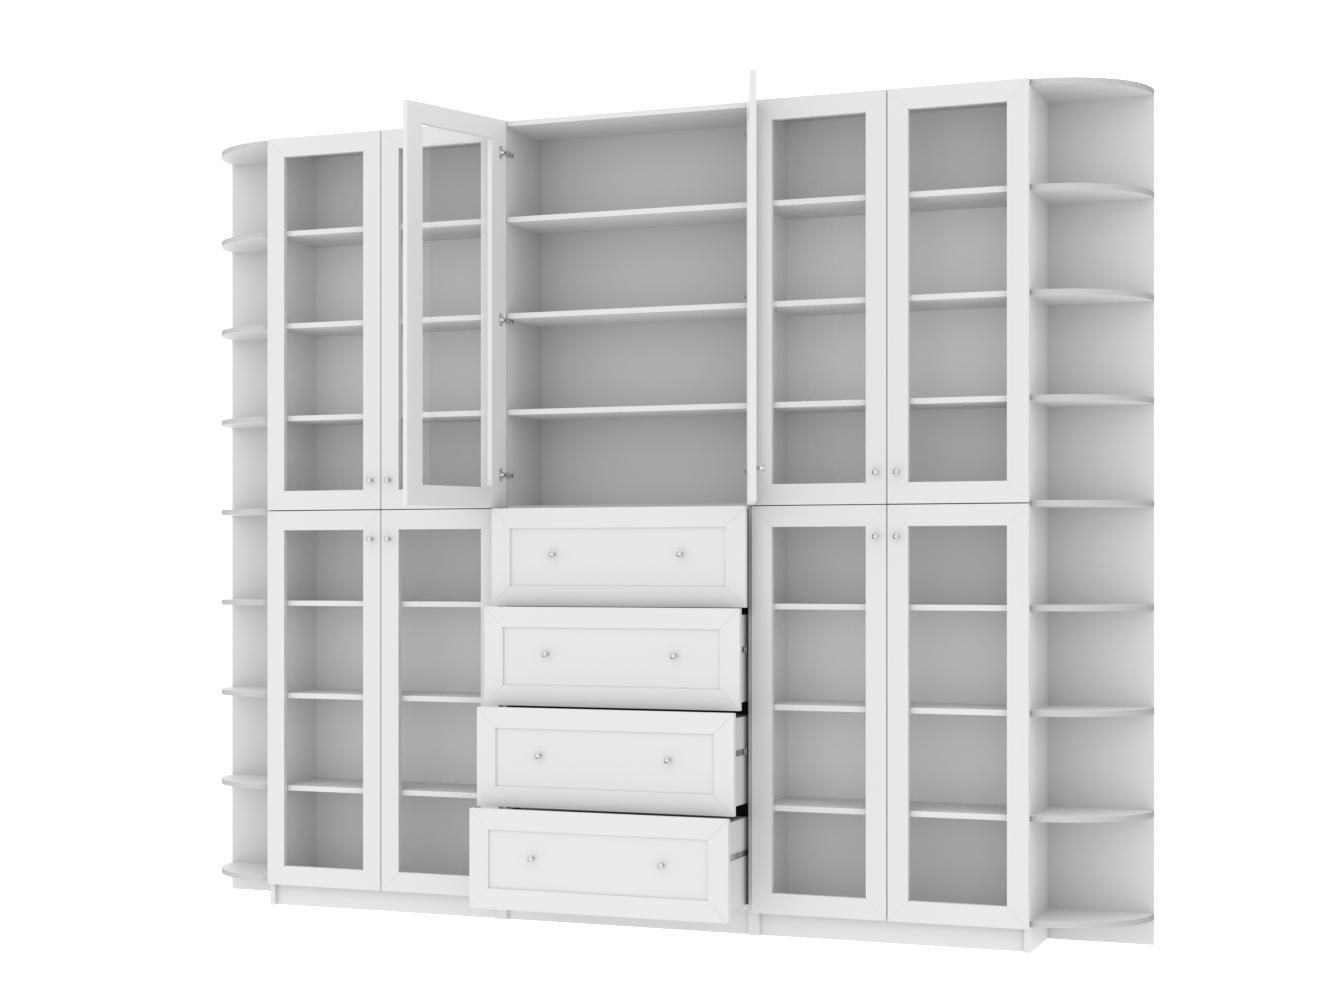  Книжный шкаф Билли 424 white ИКЕА (IKEA) изображение товара